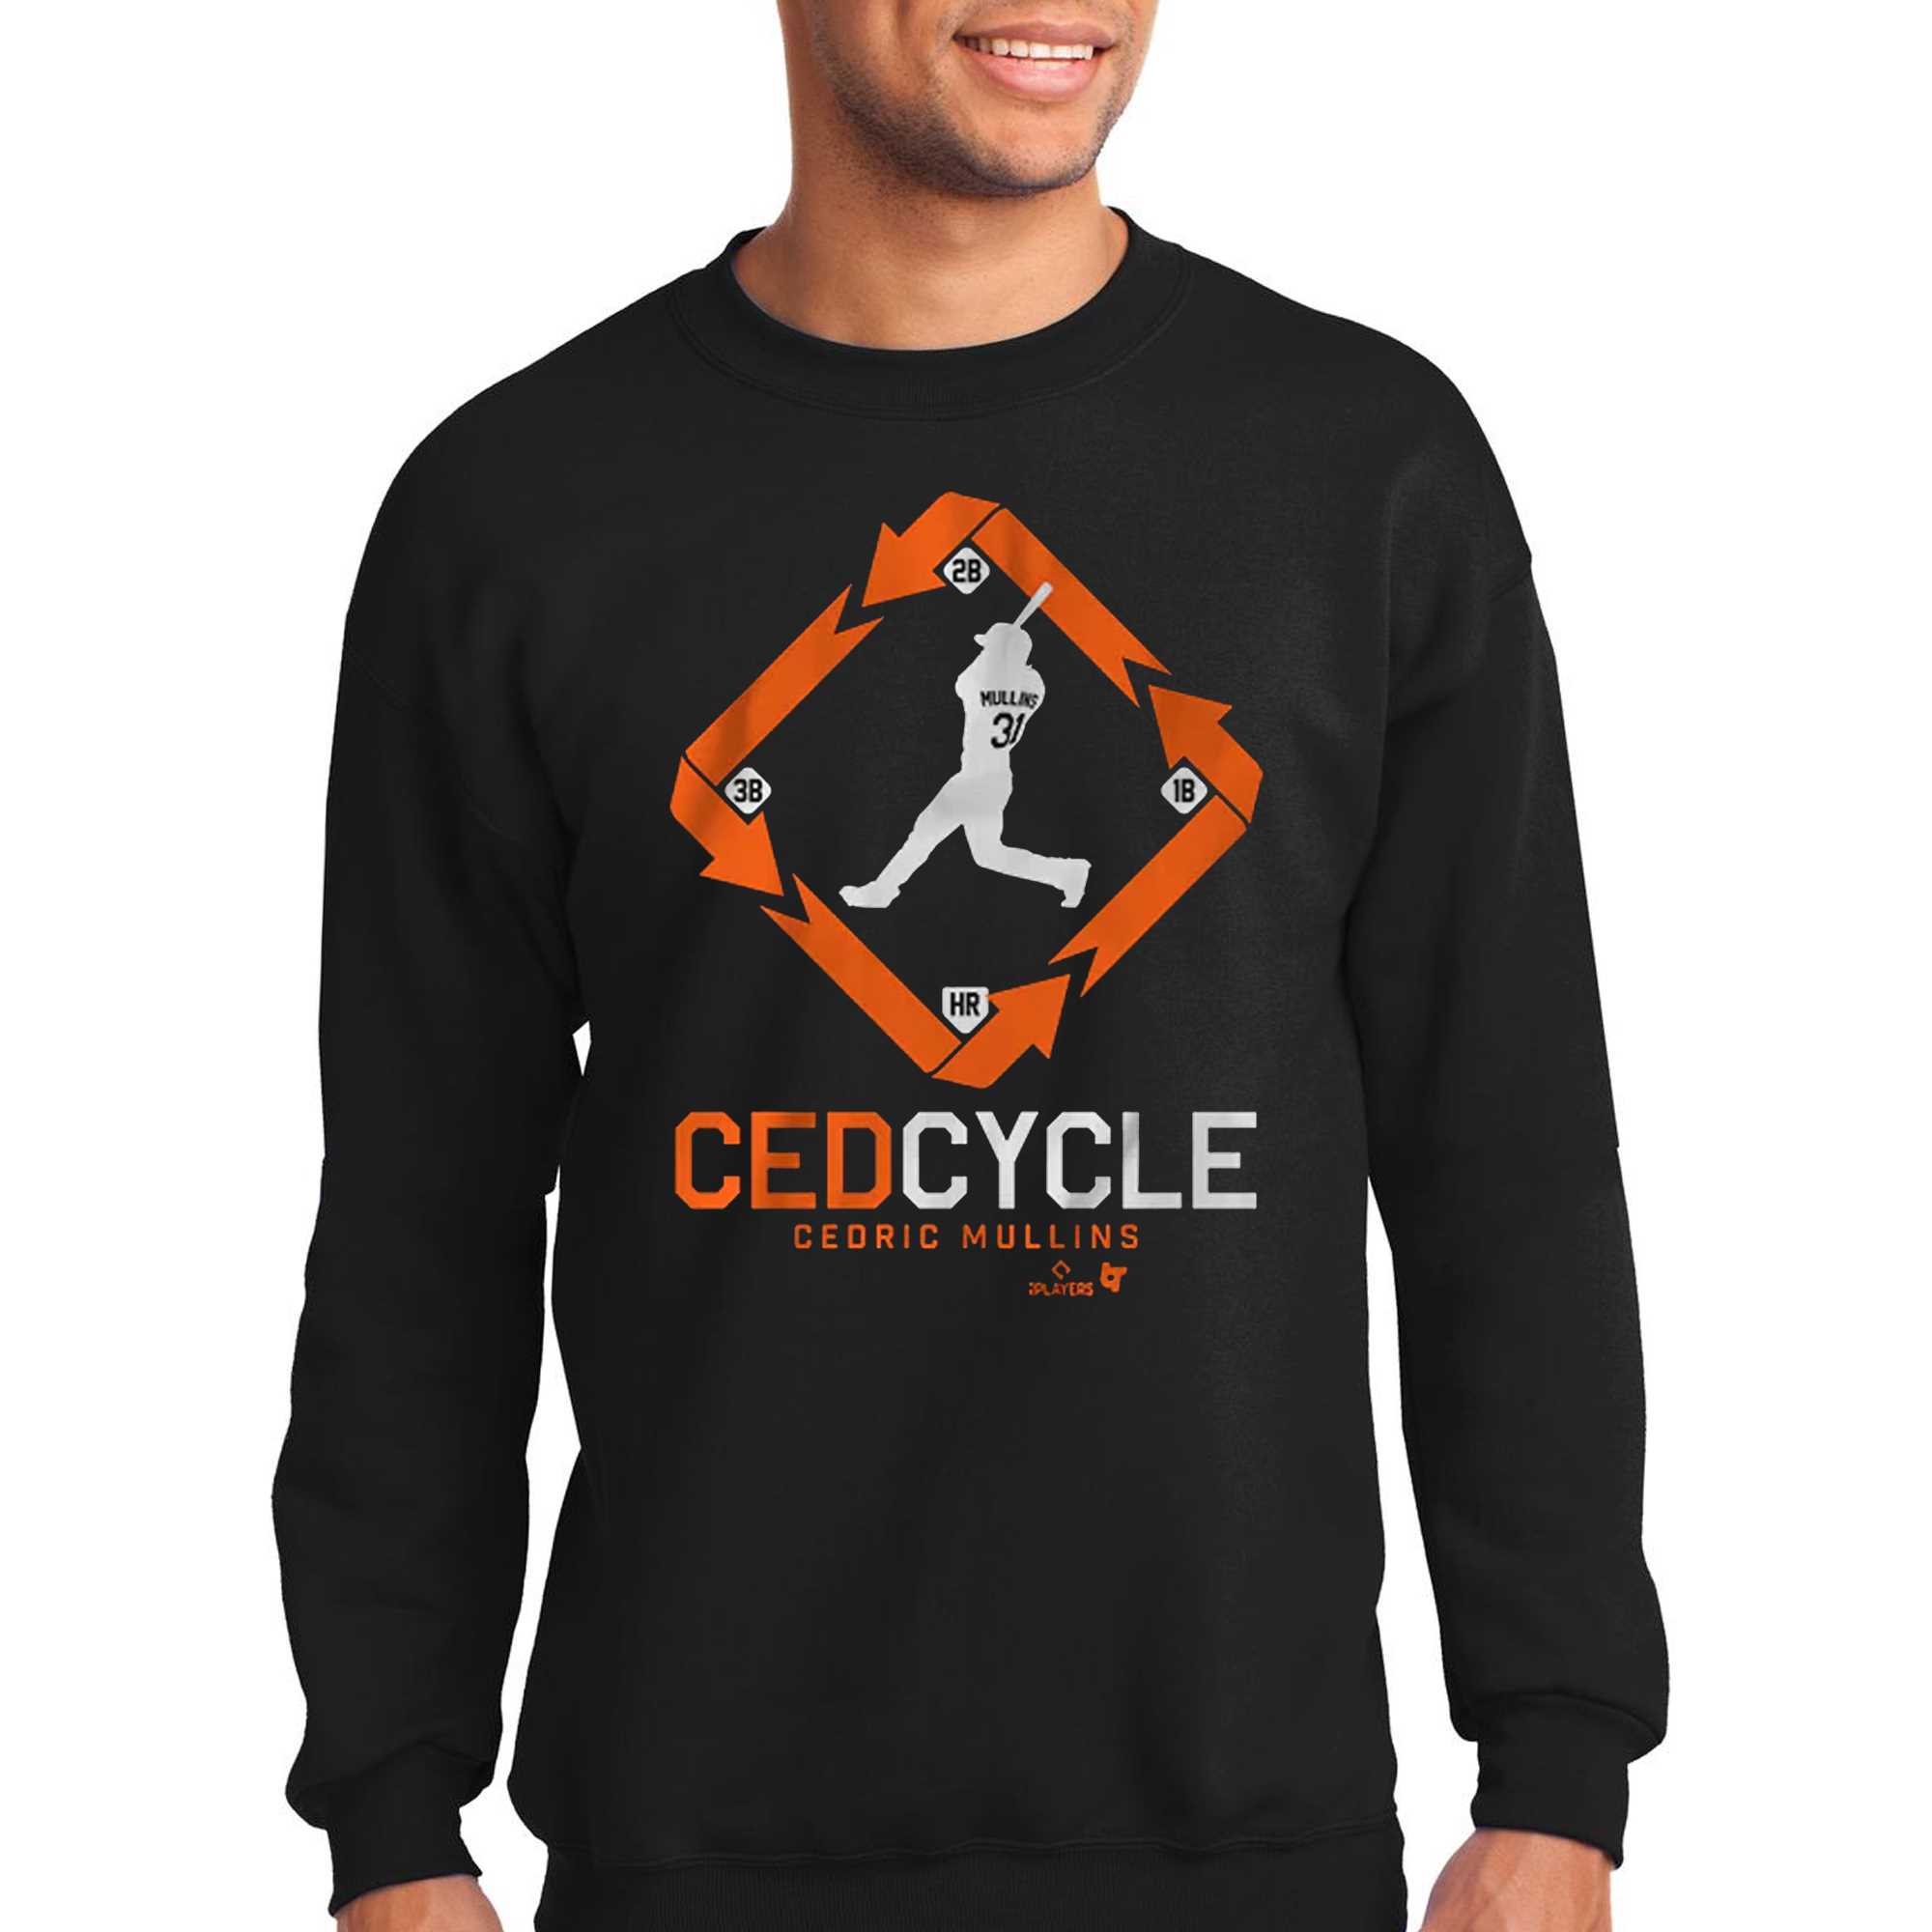 Cedric Mullins Cycle Shirt 